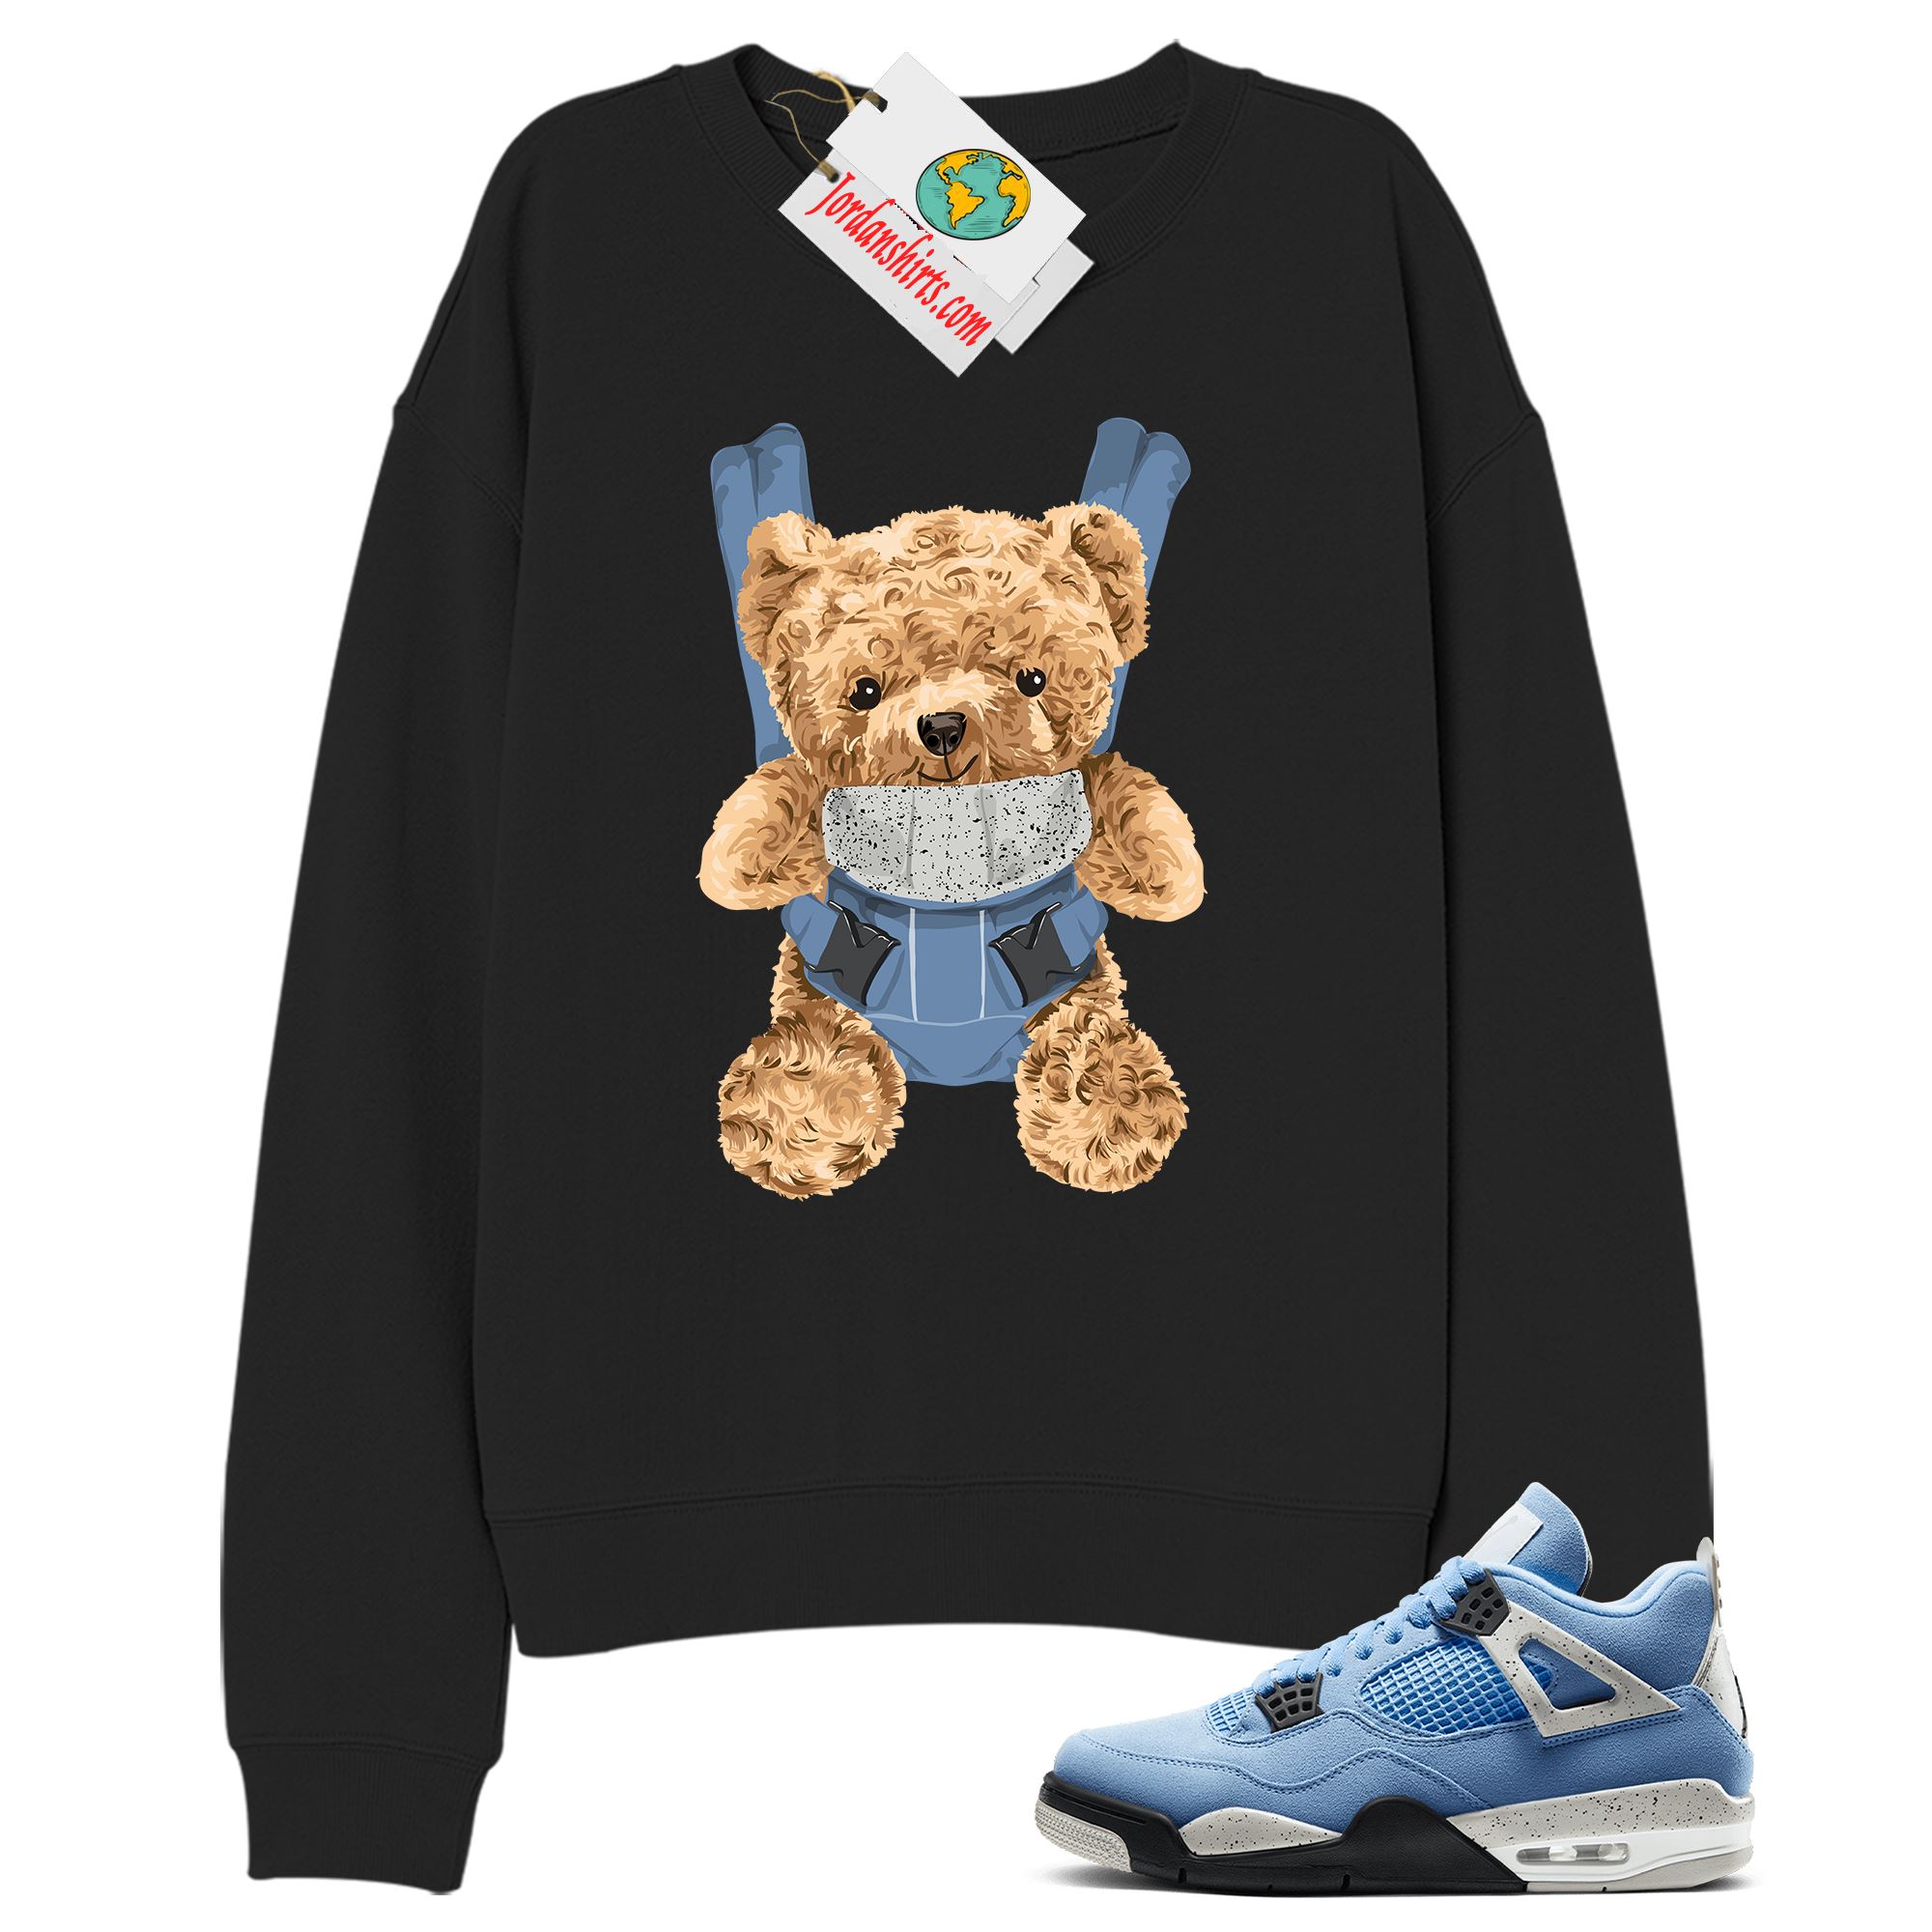 Jordan 4 Sweatshirt, Teddy Bear Bag Black Sweatshirt Air Jordan 4 University Blue 4s Size Up To 5xl